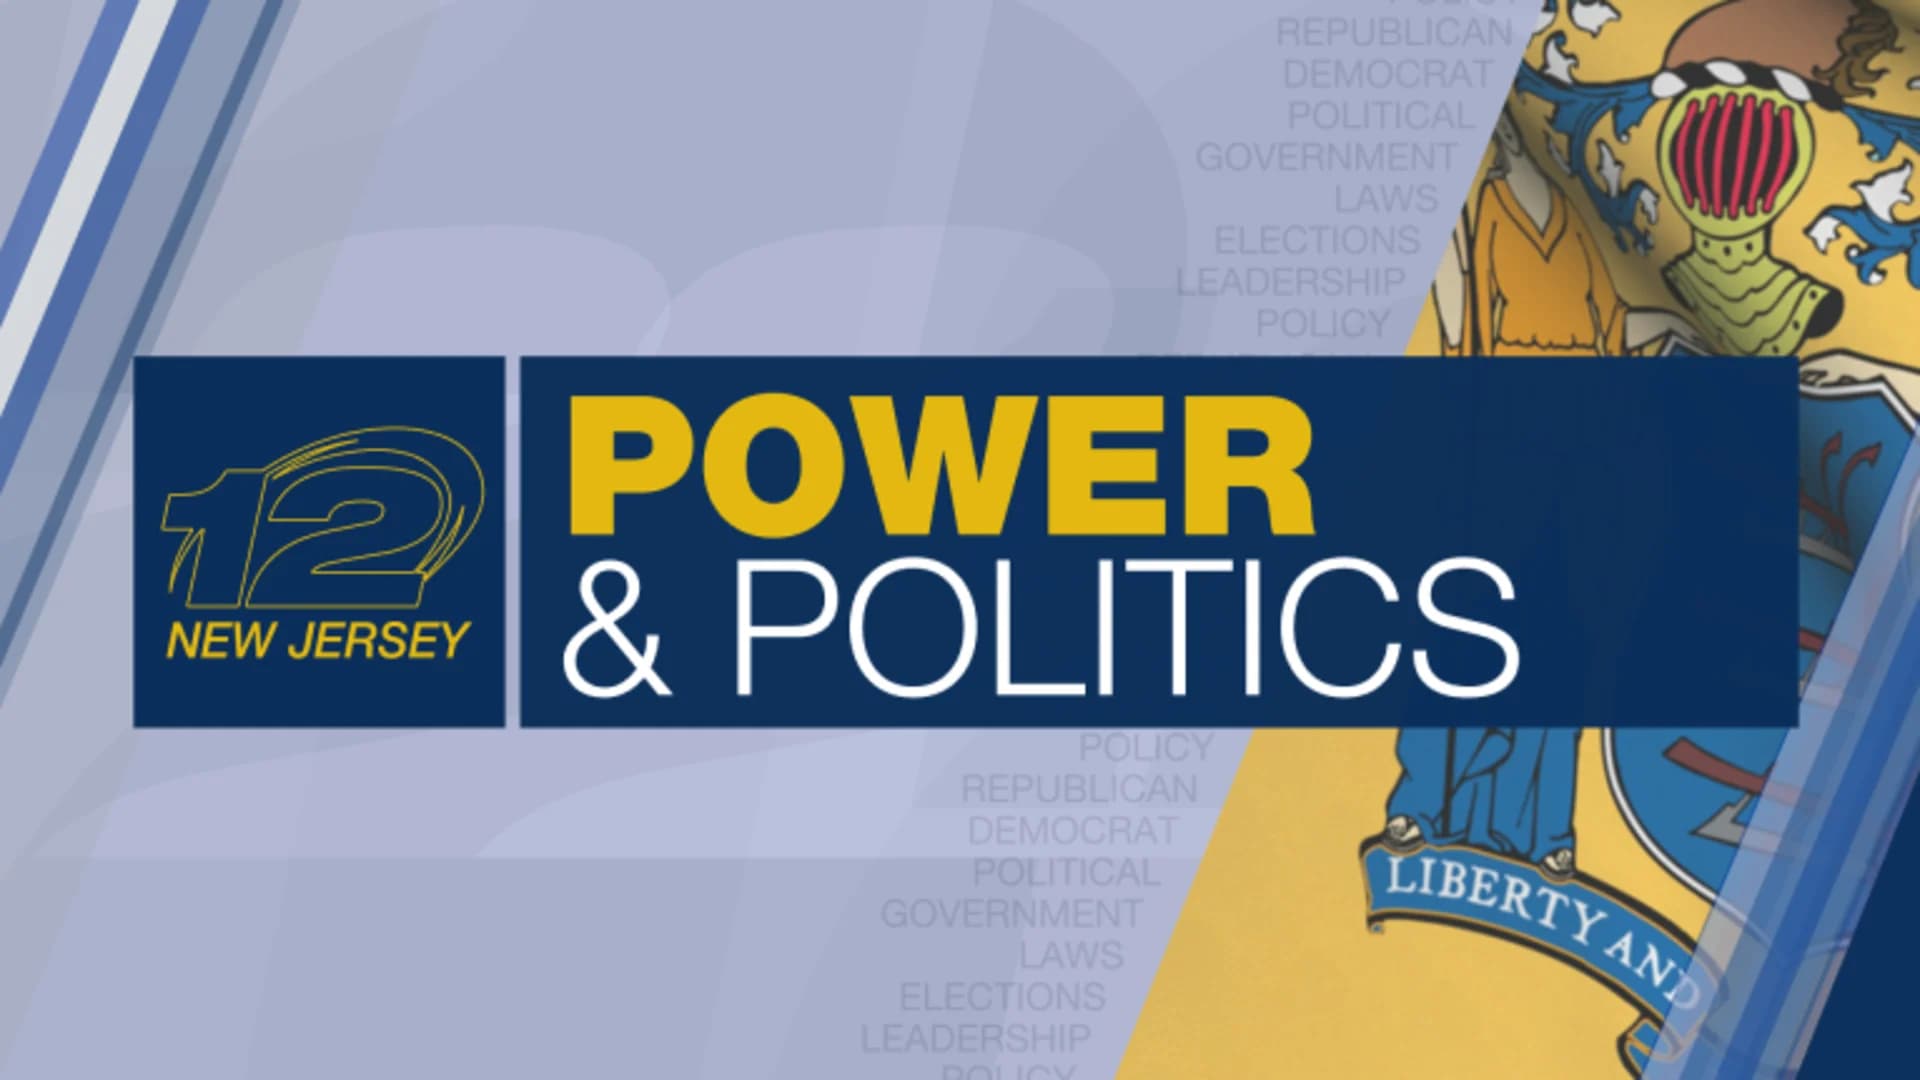 Power & Politics - Show Information